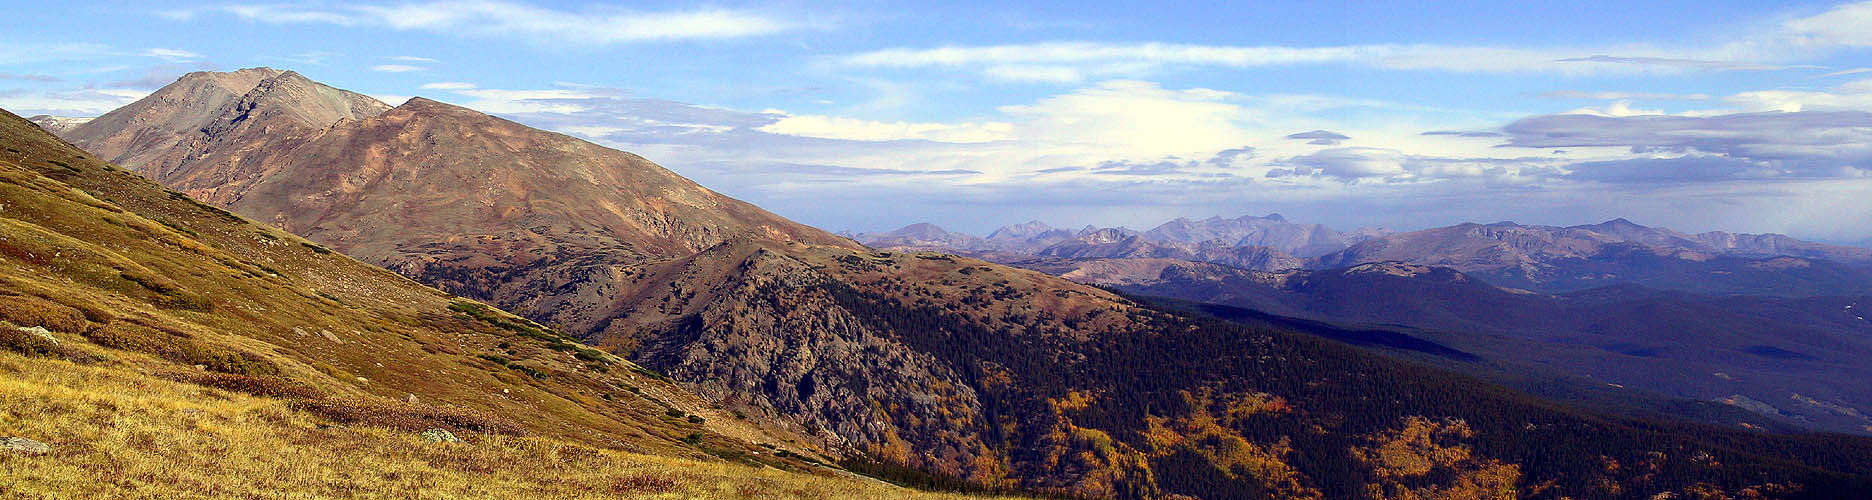 Mt Elbert 2001: Mount Massive Panoramic